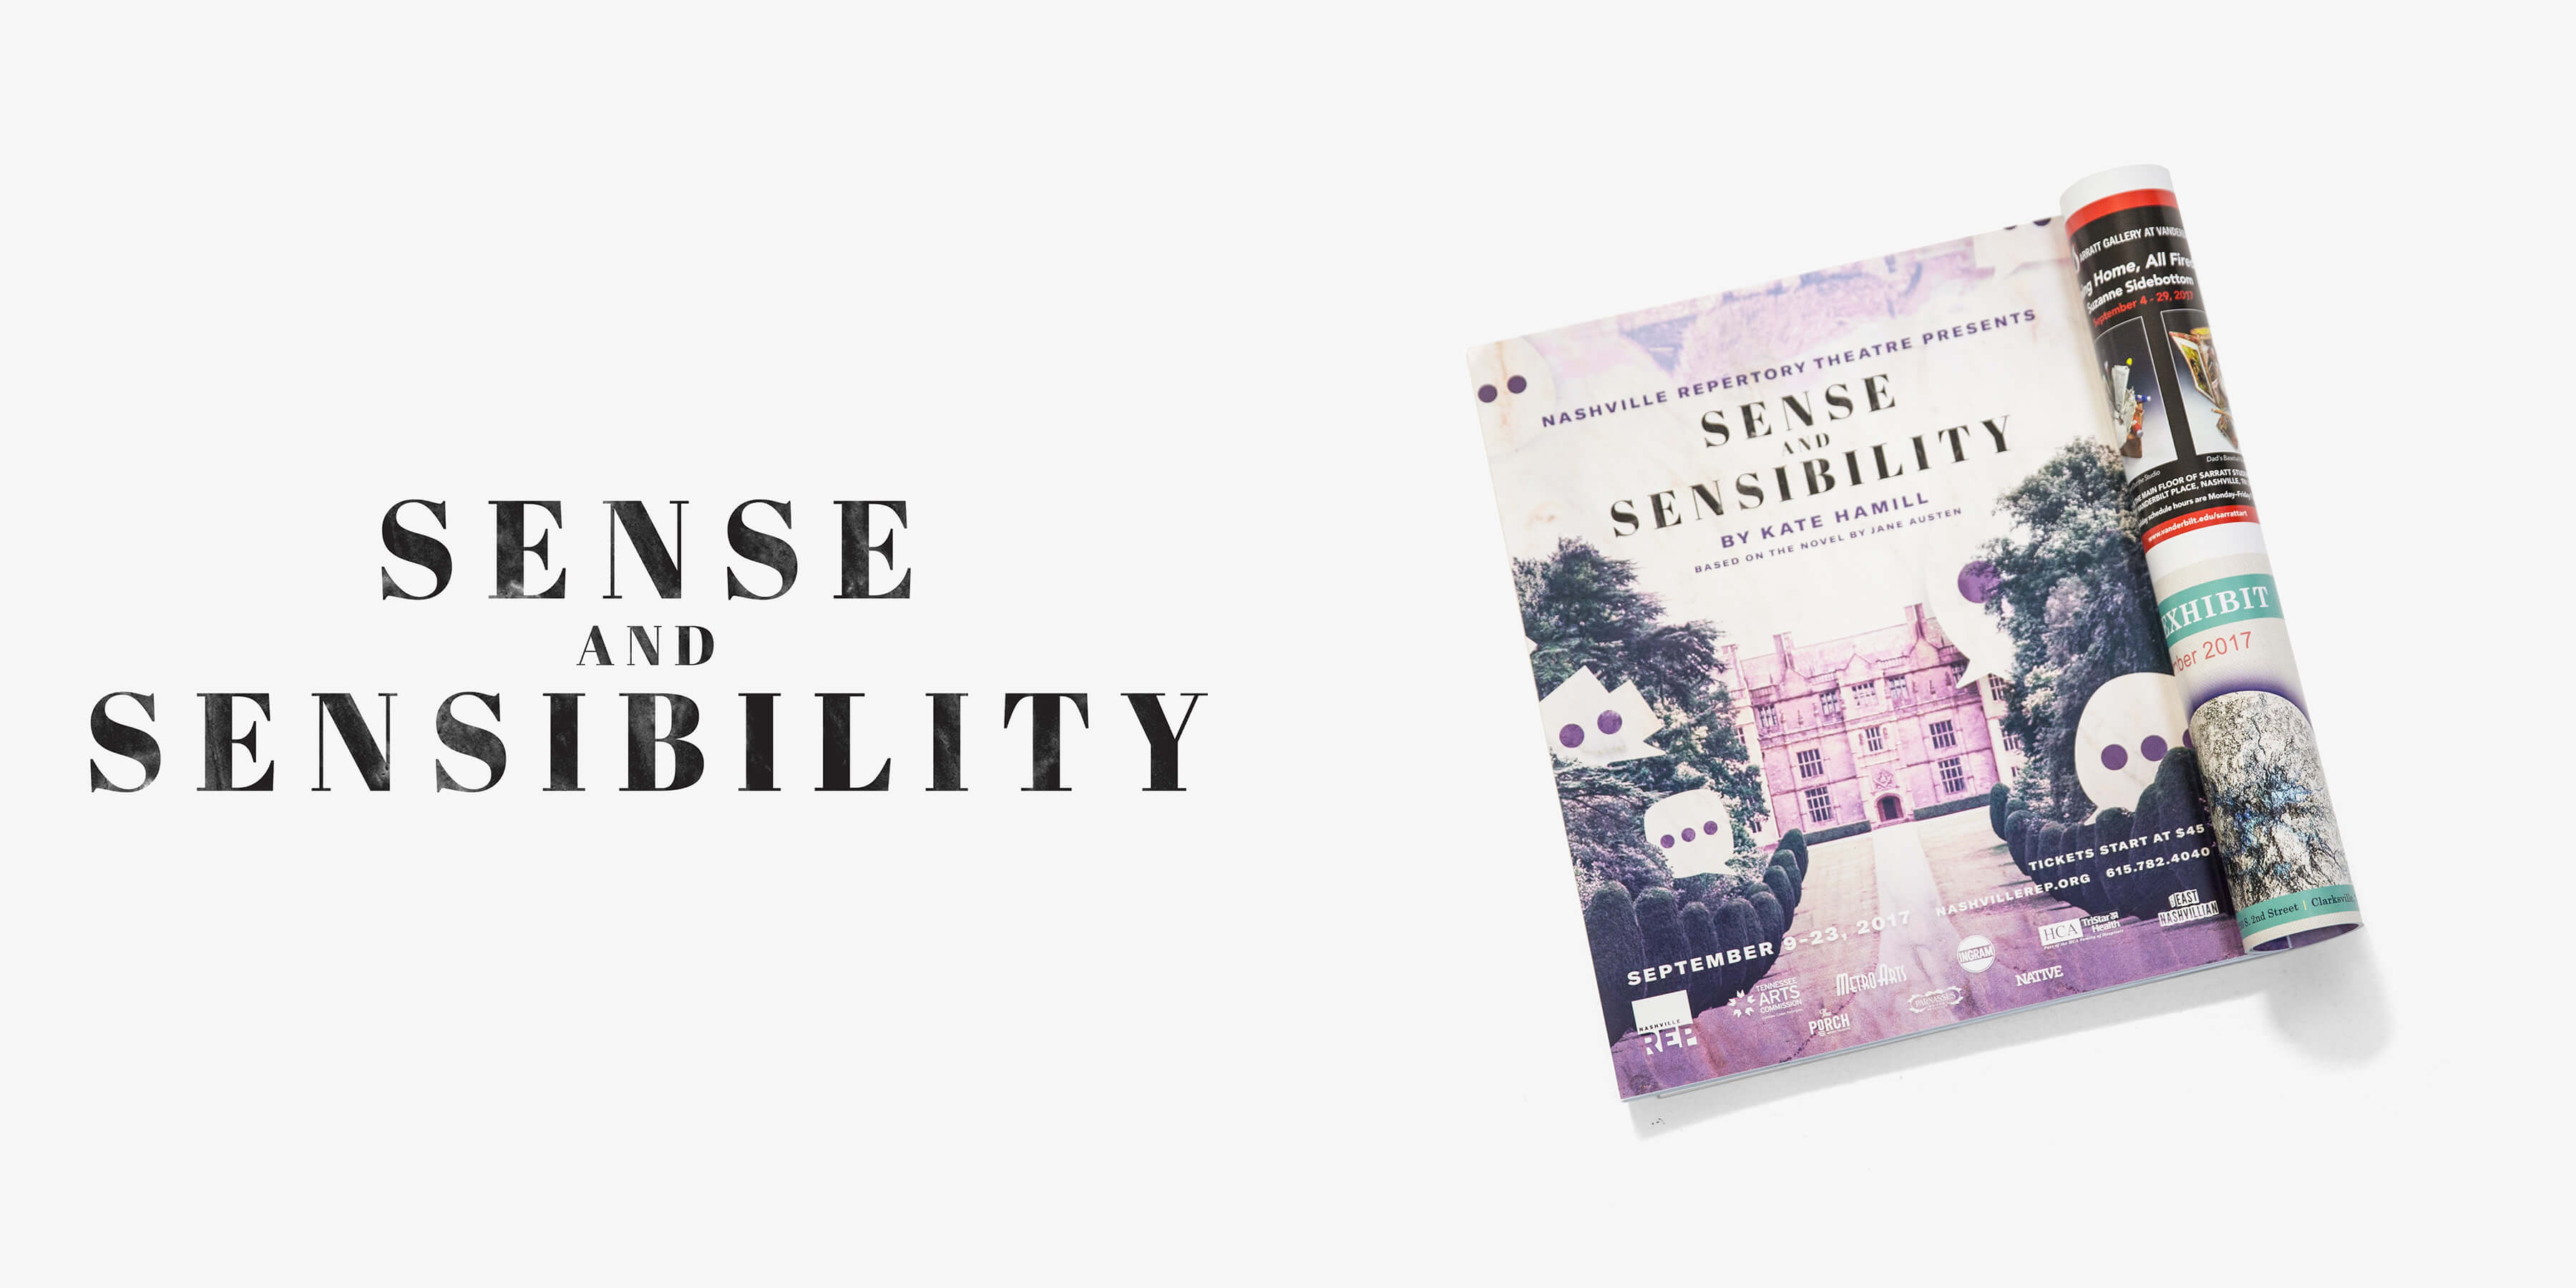 Sense And Sensibility Title Treatment and Magazine Ad for Nashville Repertory Theatre